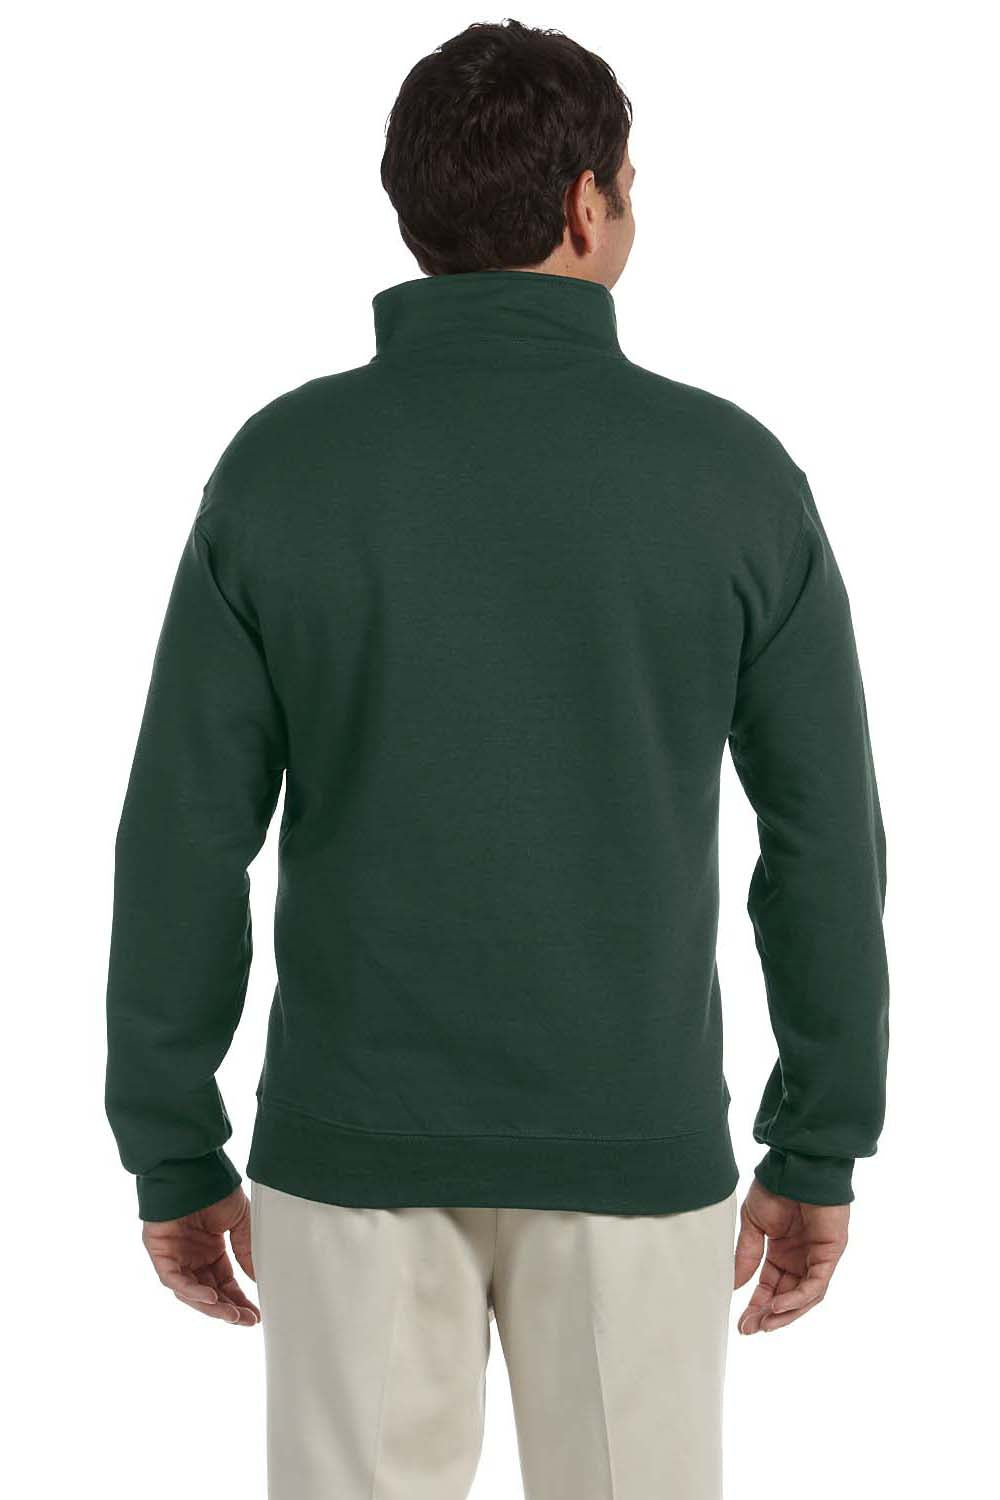 Jerzees 4528 Mens Super Sweats NuBlend Fleece 1/4 Zip Sweatshirt Forest Green Back